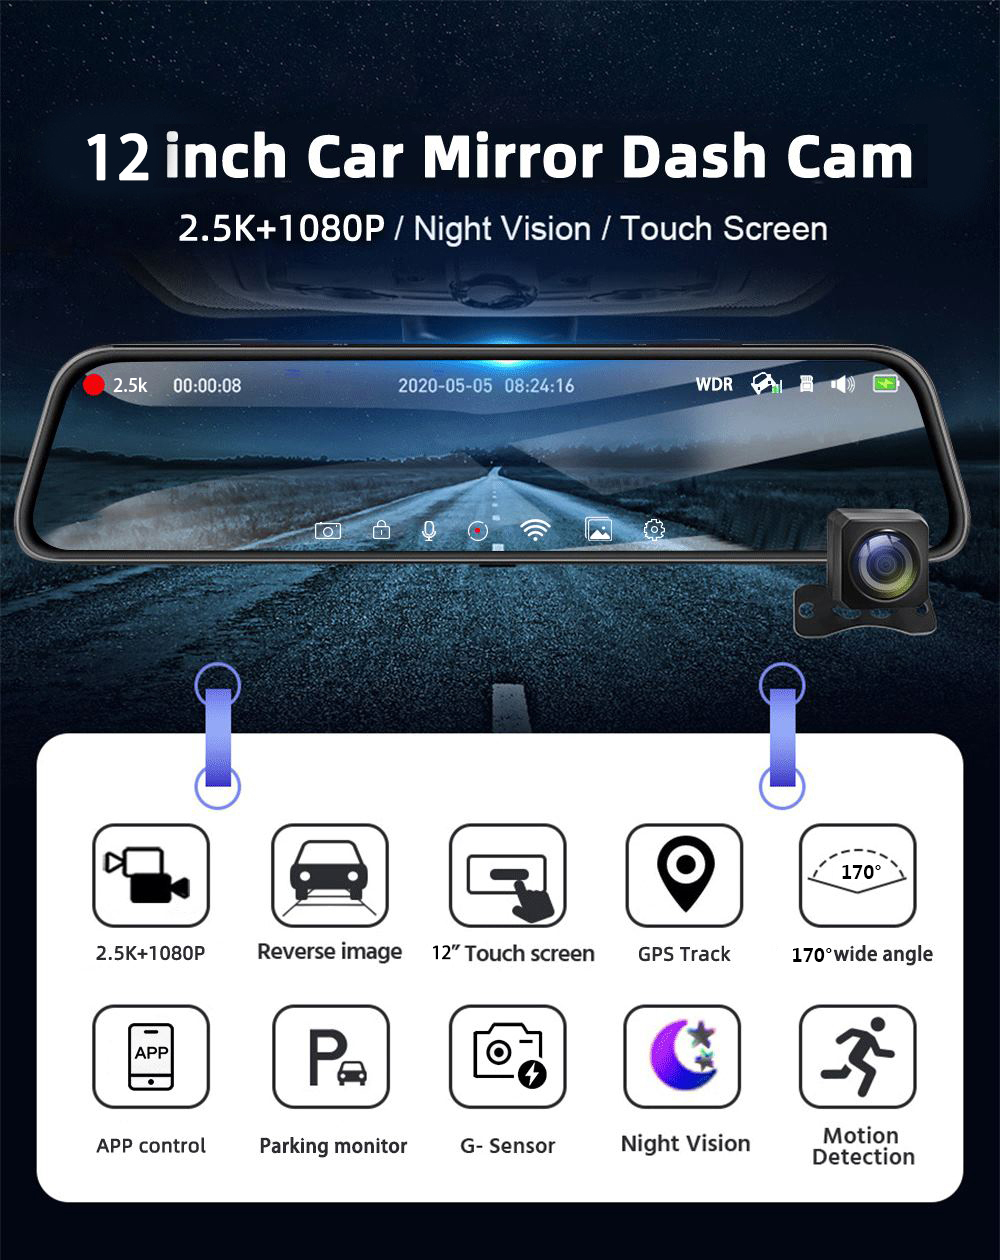  Mirror Dash Cam